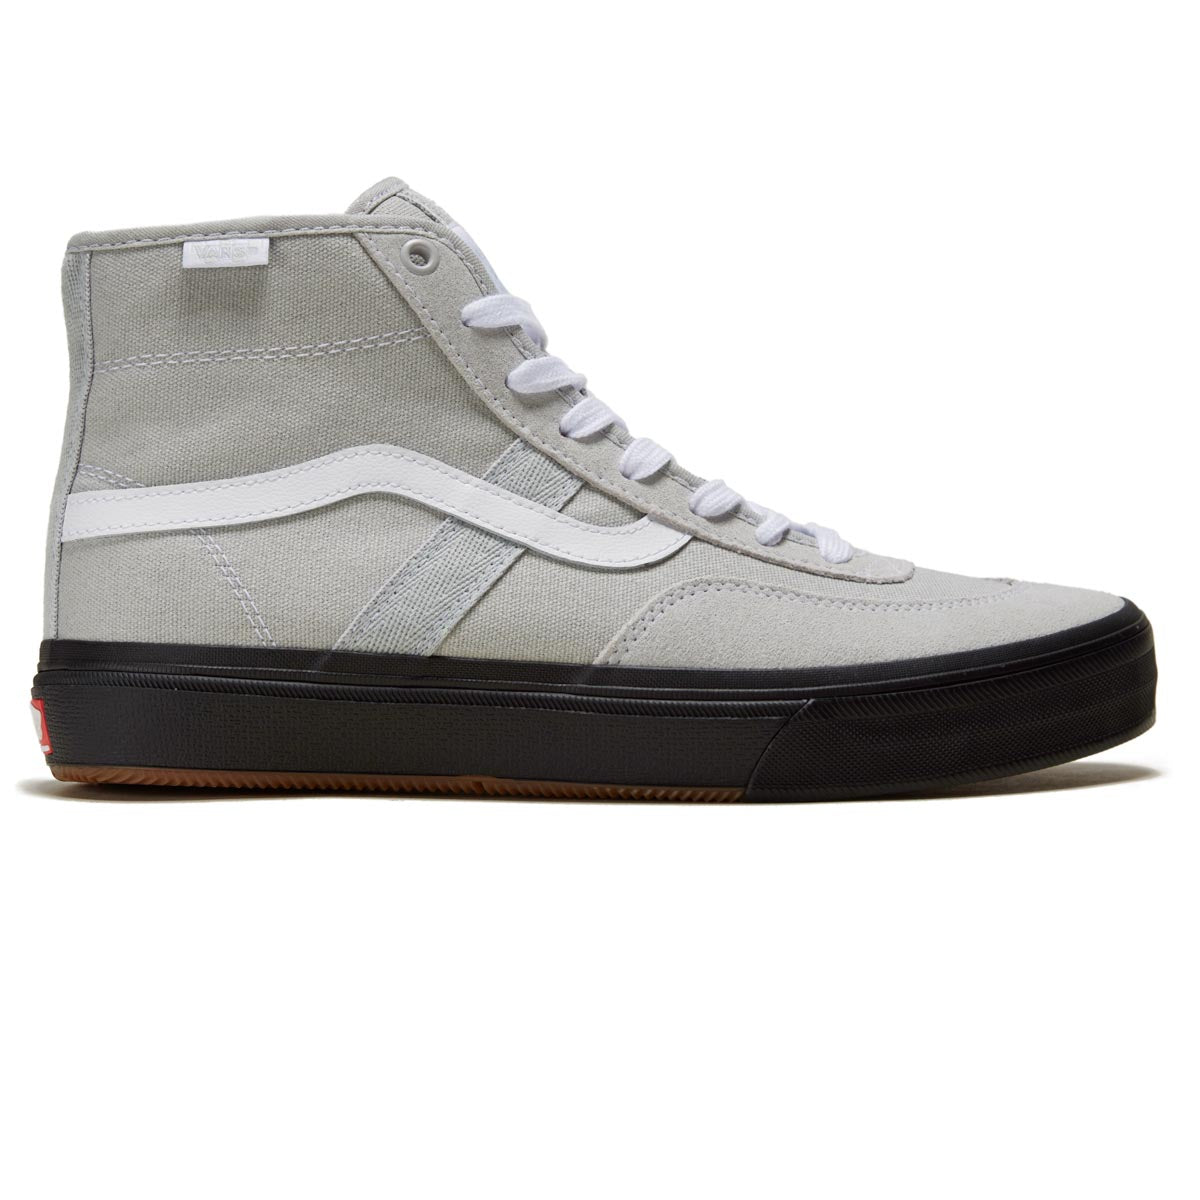 Vans Crockett High Shoes - Light Gray/Black image 1